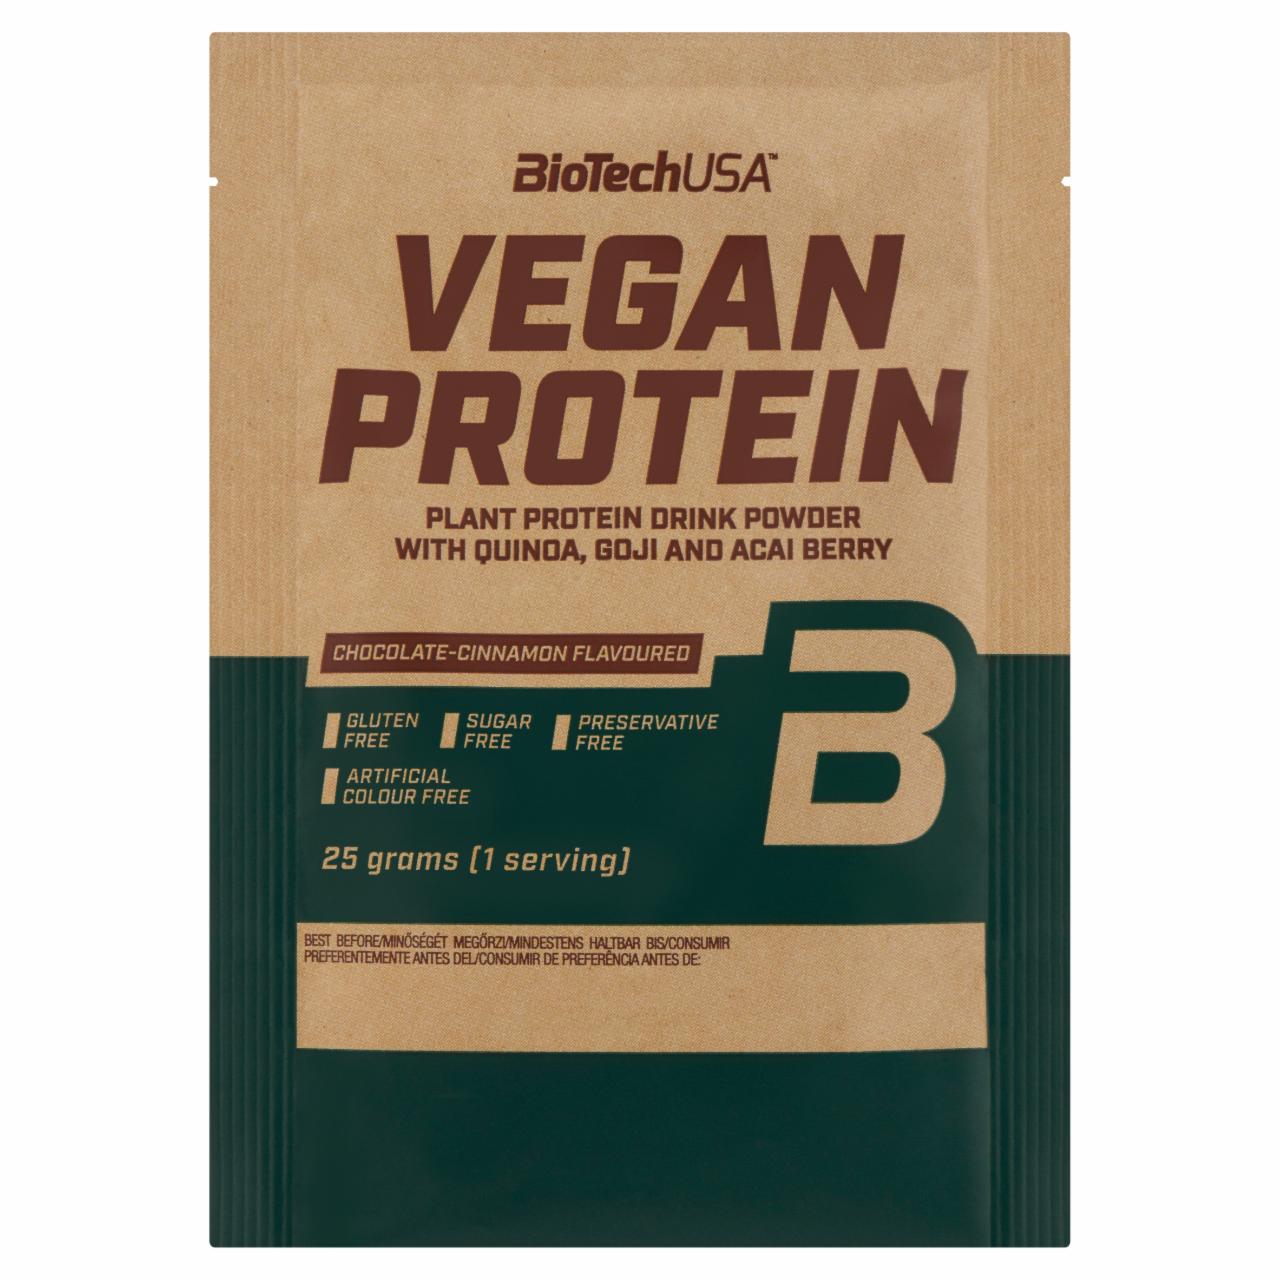 Photo - BioTechUSA Vegan Protein Sugar-Free Chocolate-Cinnamon Flavoured Plant Protein Drink Powder 25 g